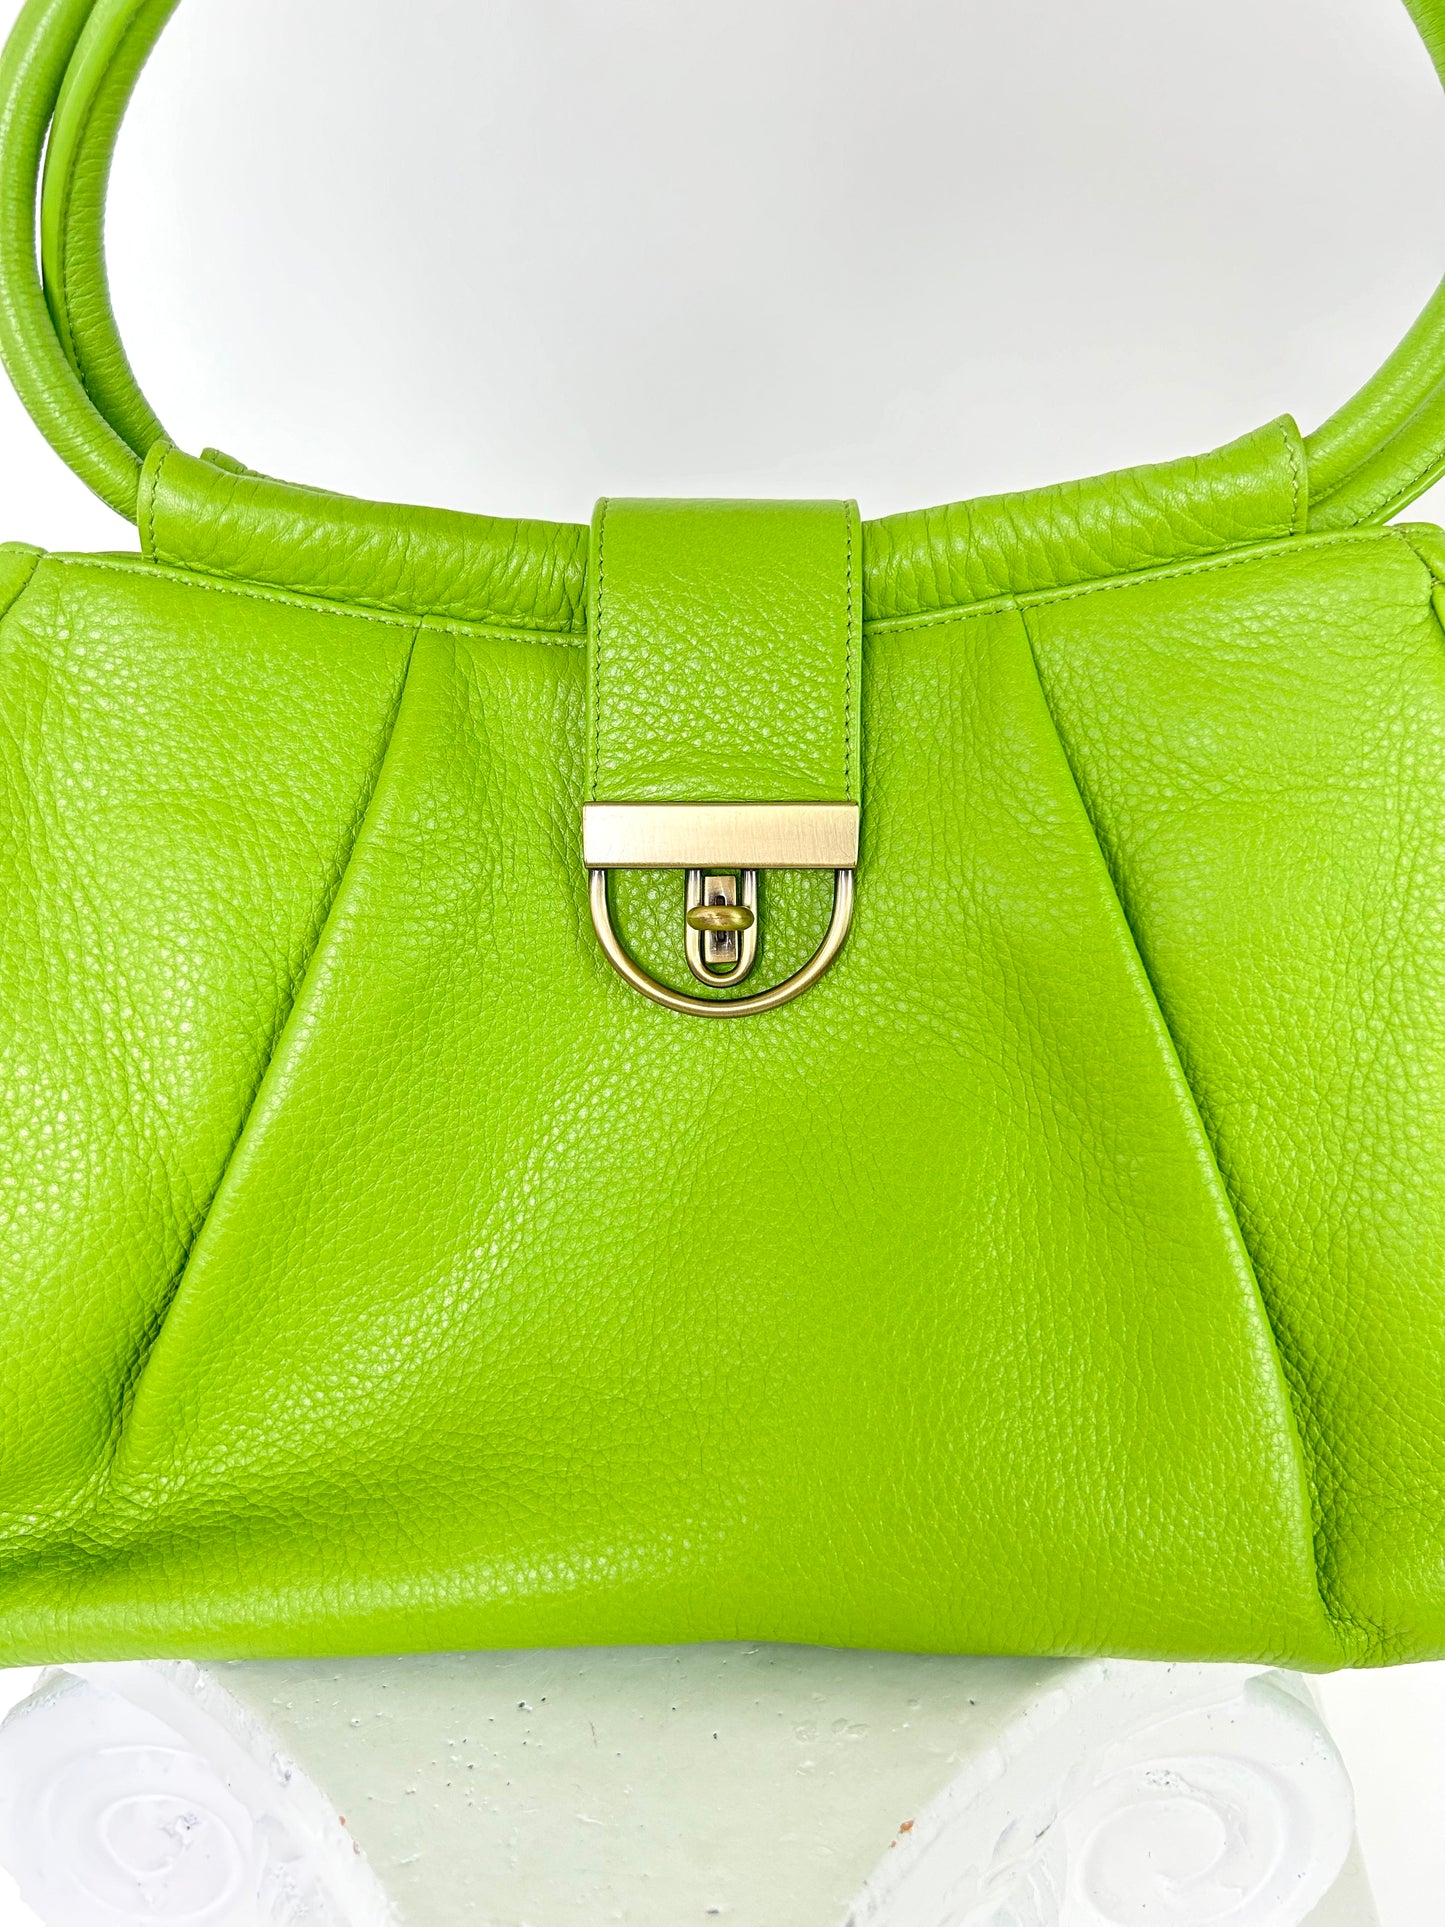 Trina Turk Lime Green Handbag